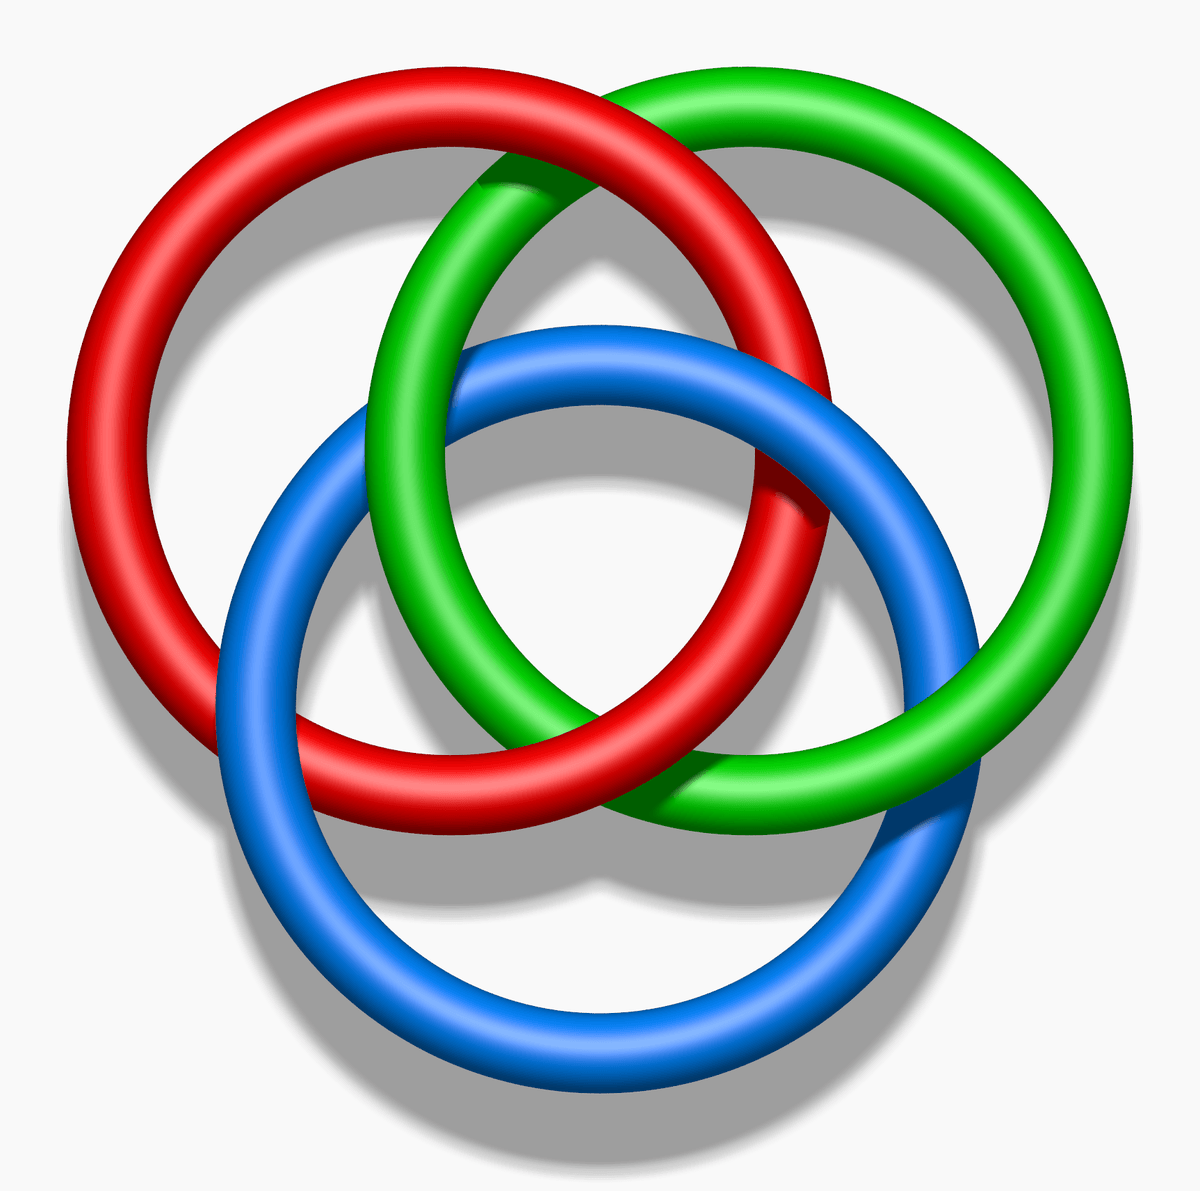 Linked Circles Logo - Borromean rings